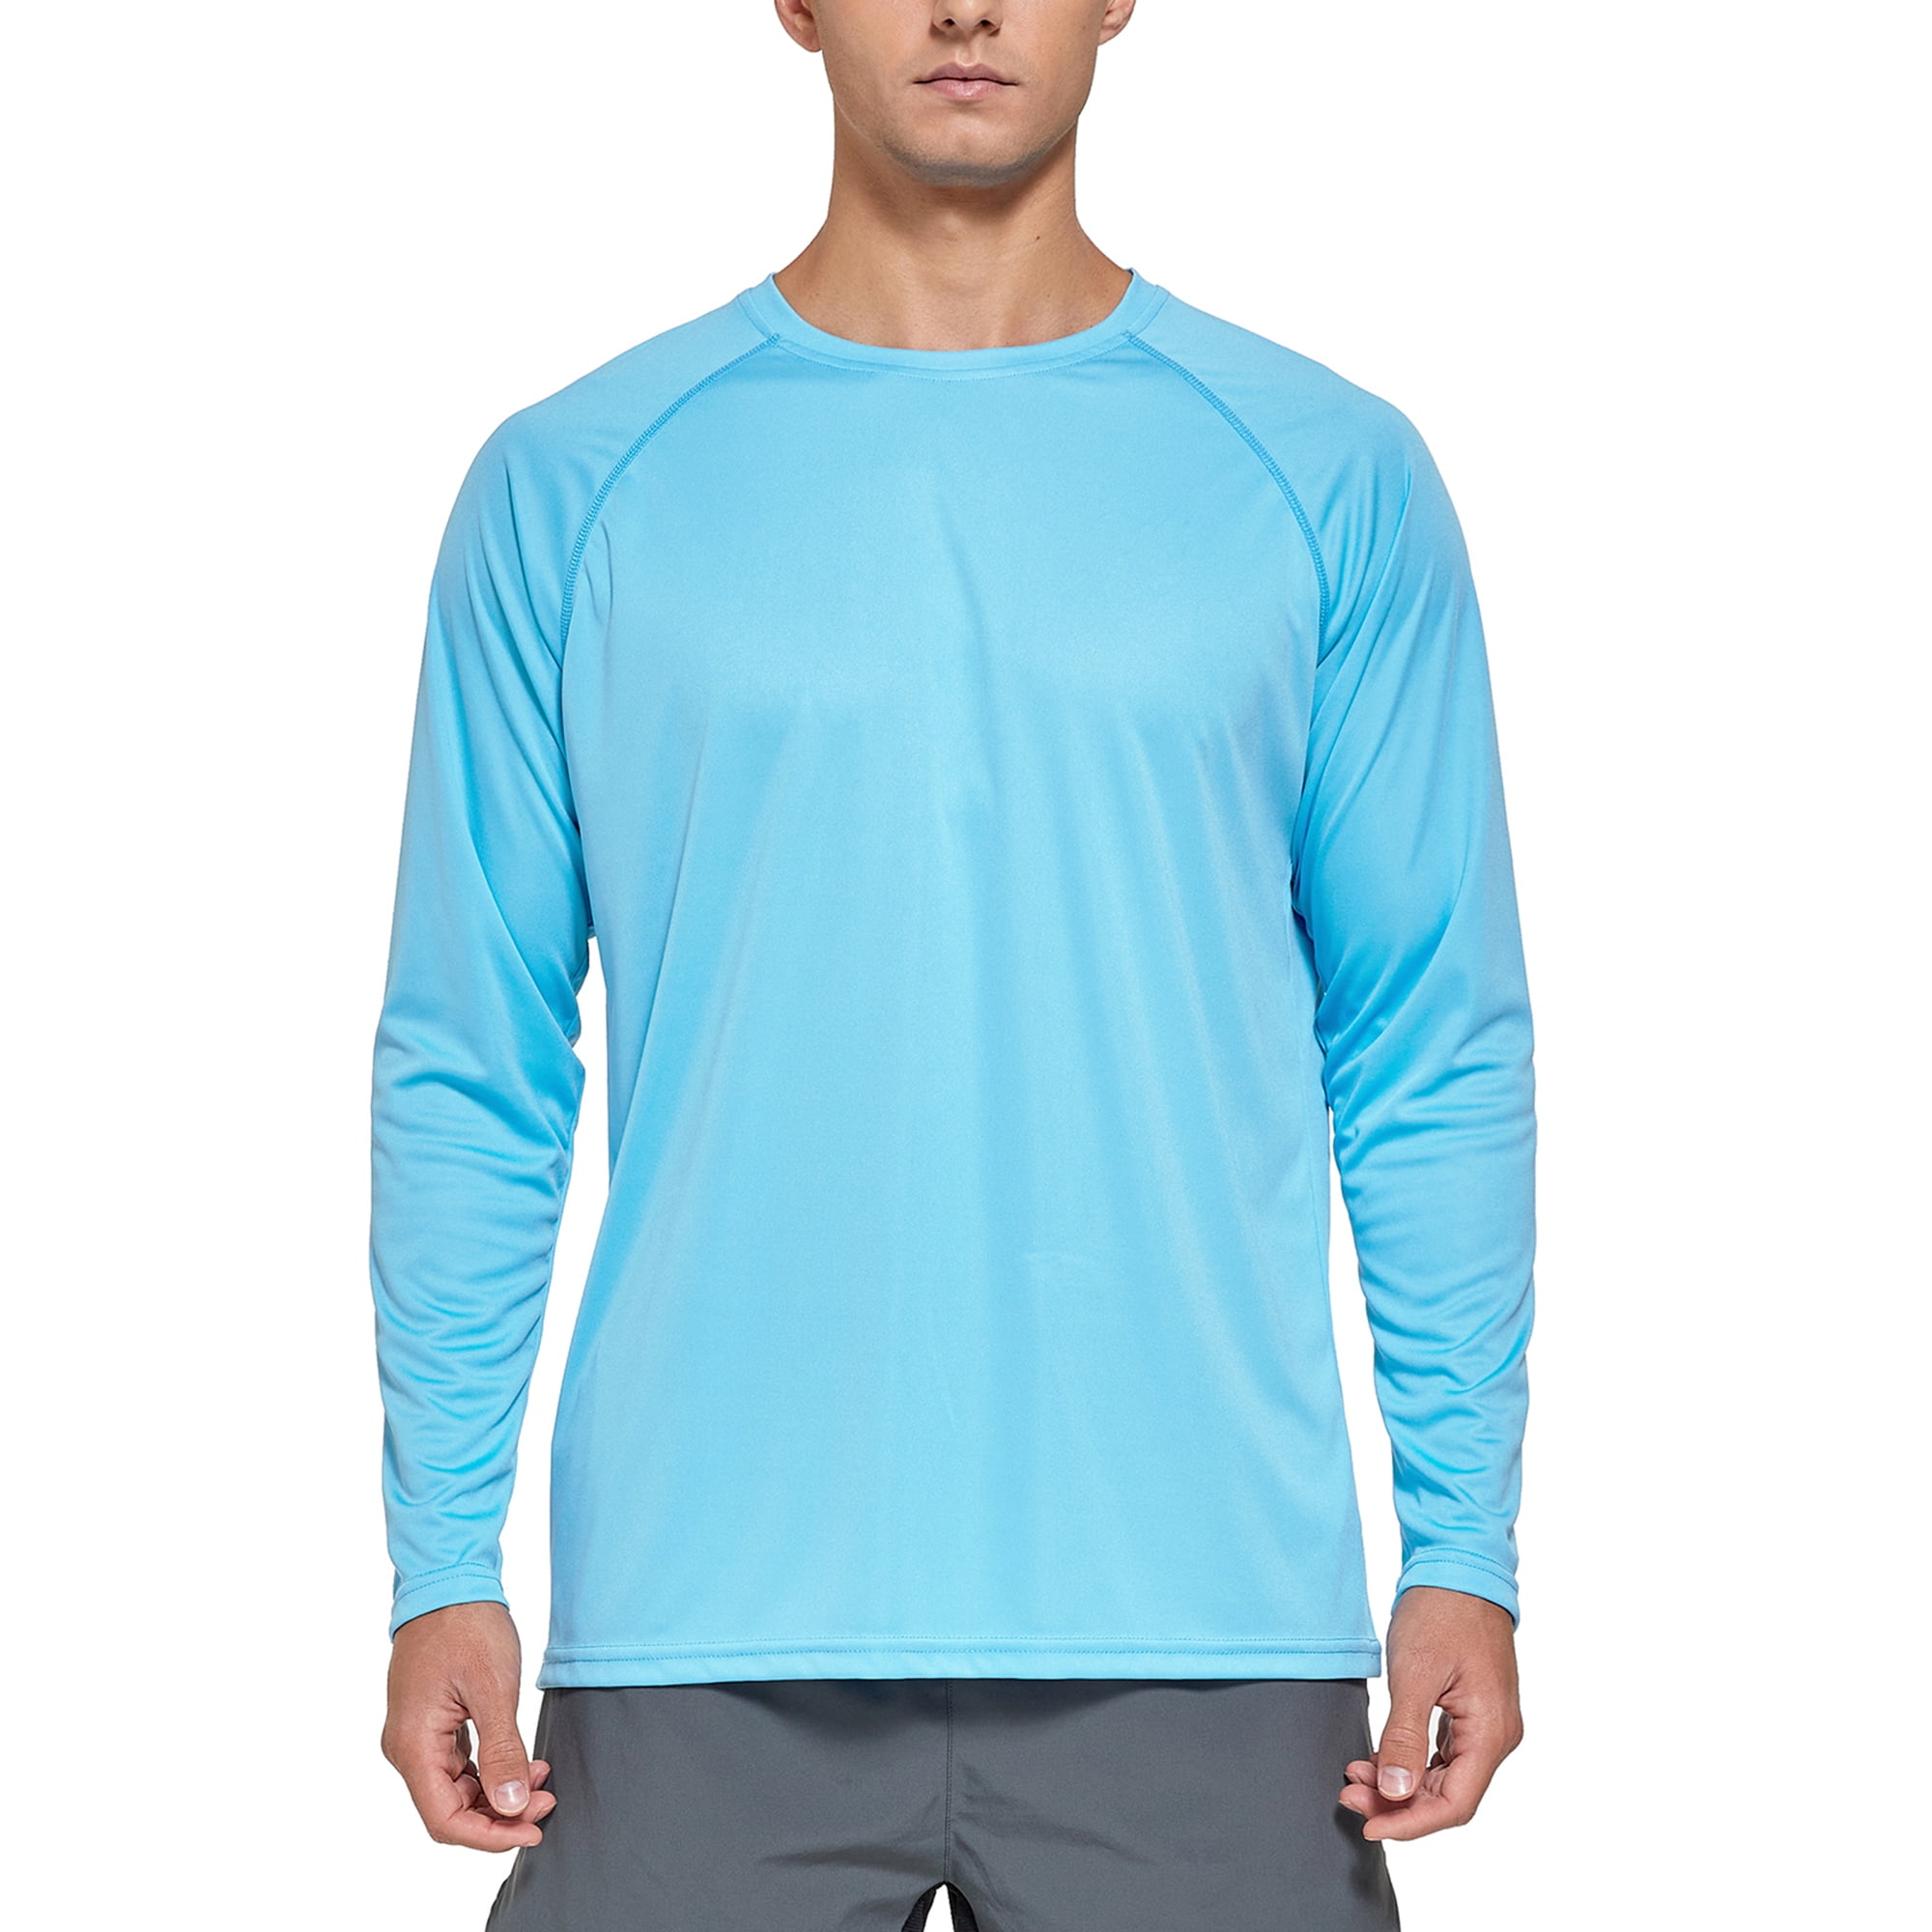 FEDTOSING Men's UPF 50+ Long Sleeve Shirts Sun Protection SPF/UV ...